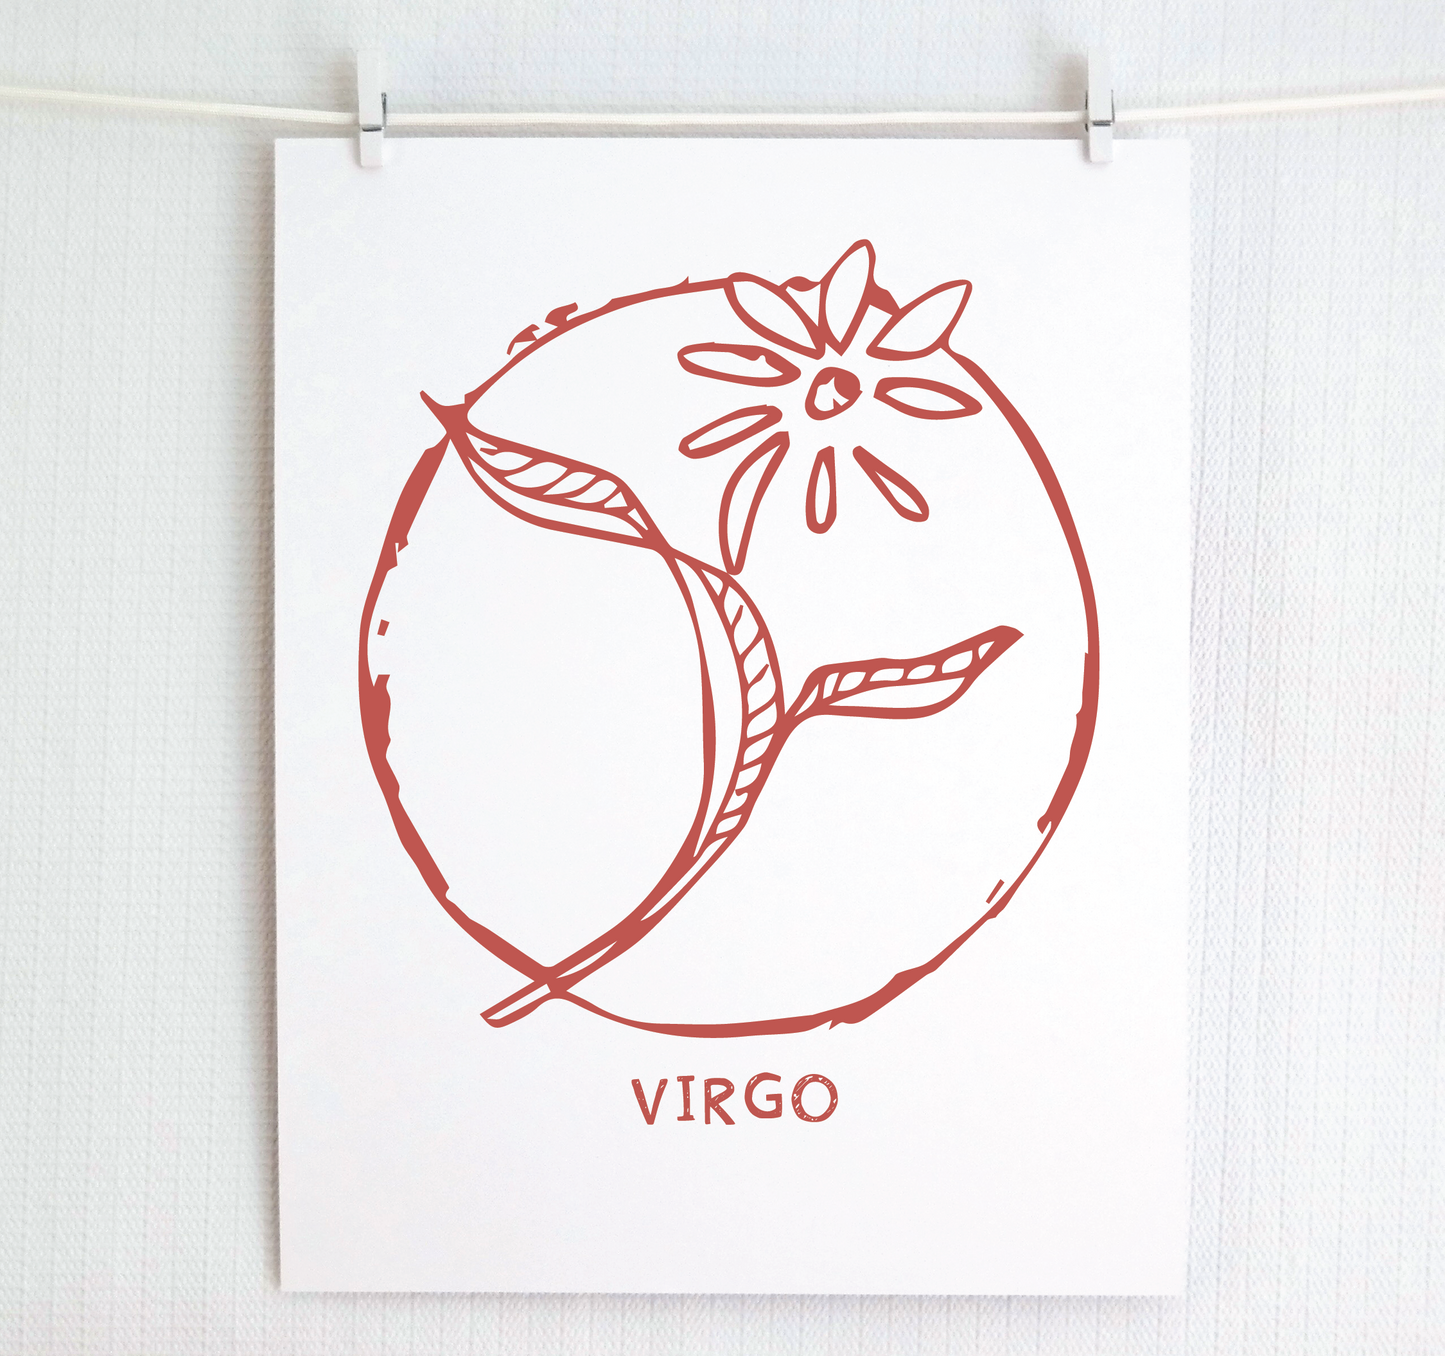 Signs of the Zodiac: VIRGO